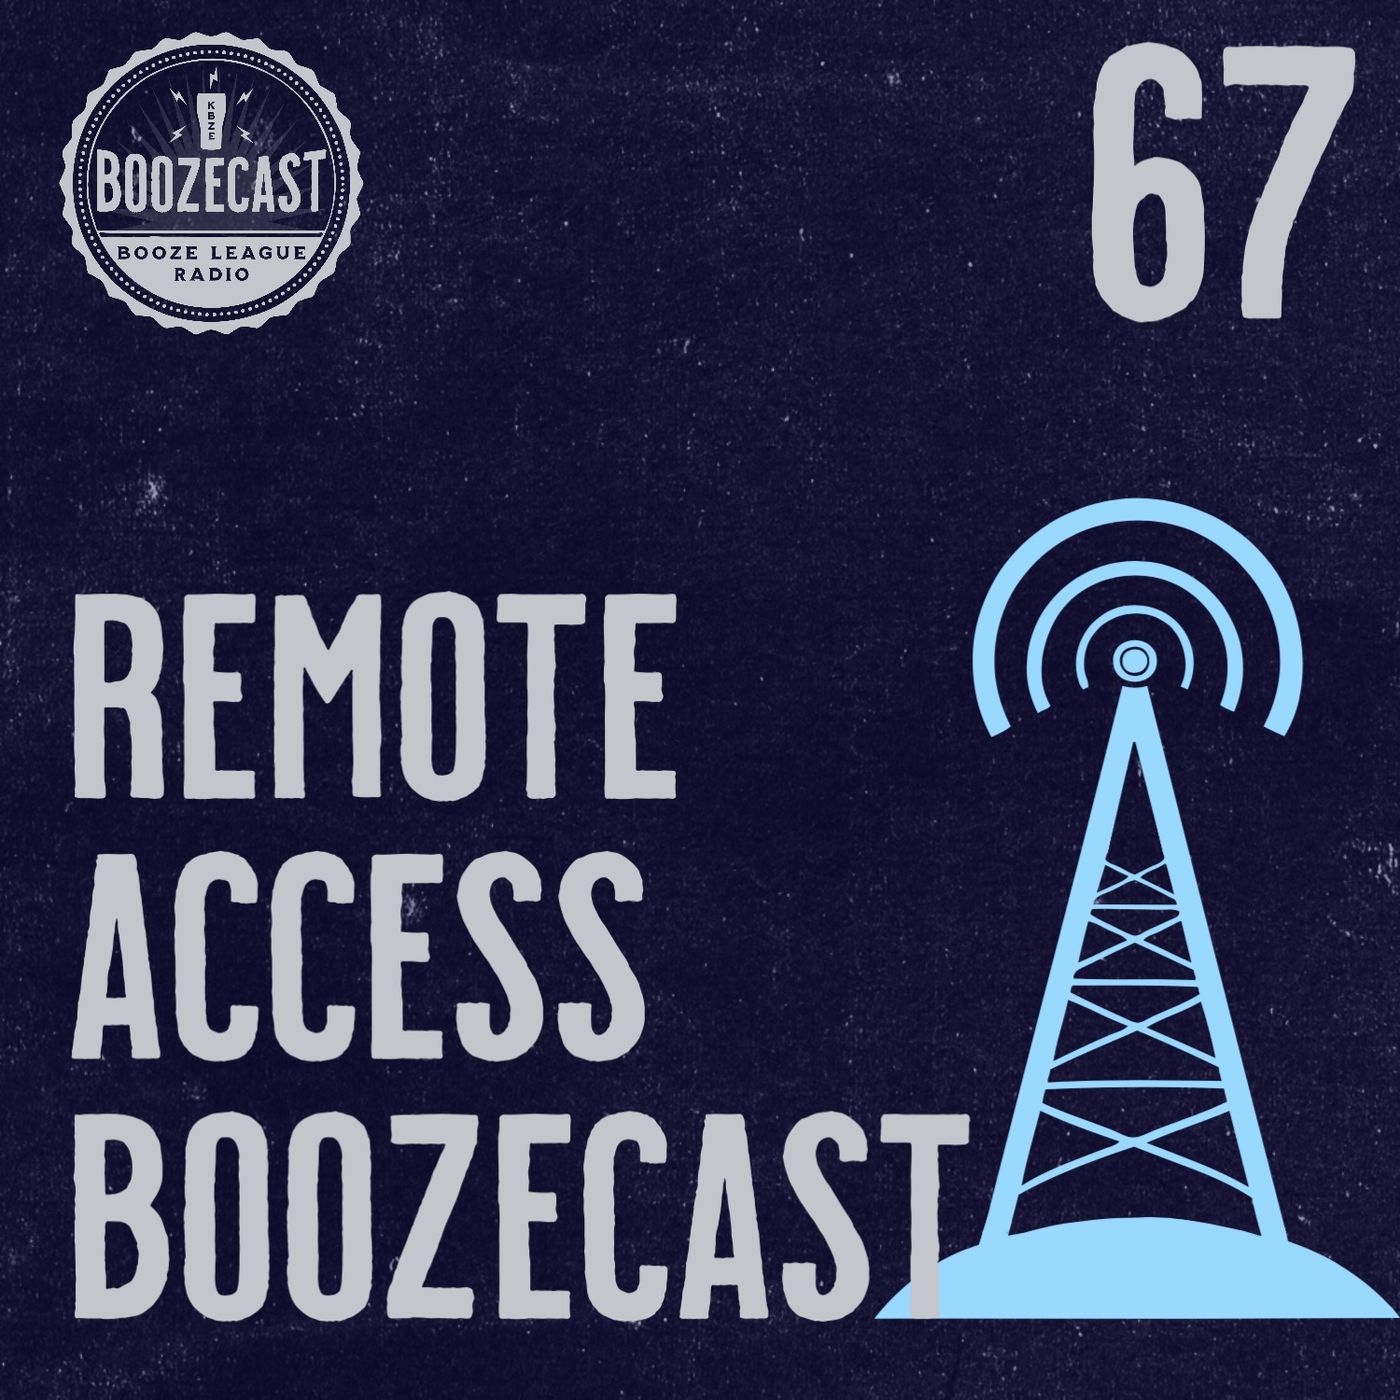 Draught 67: Remote Access BoozeCast